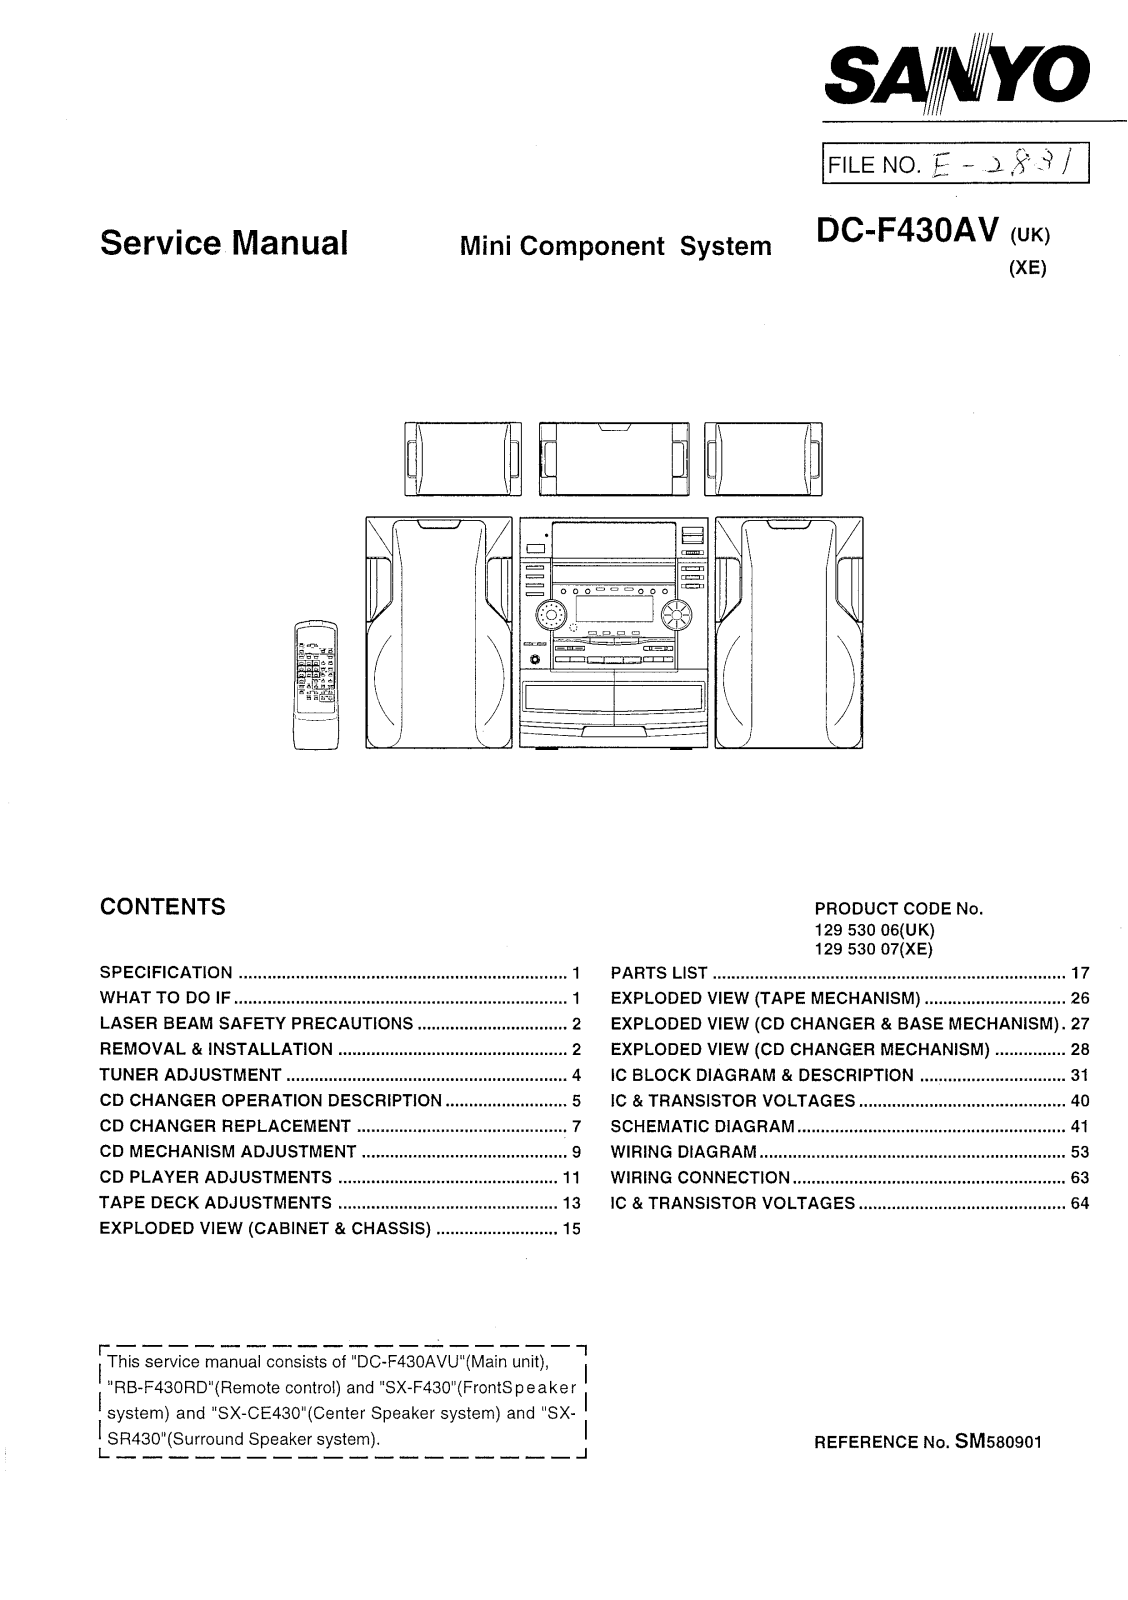 Sanyo DC F430AV Service Manual